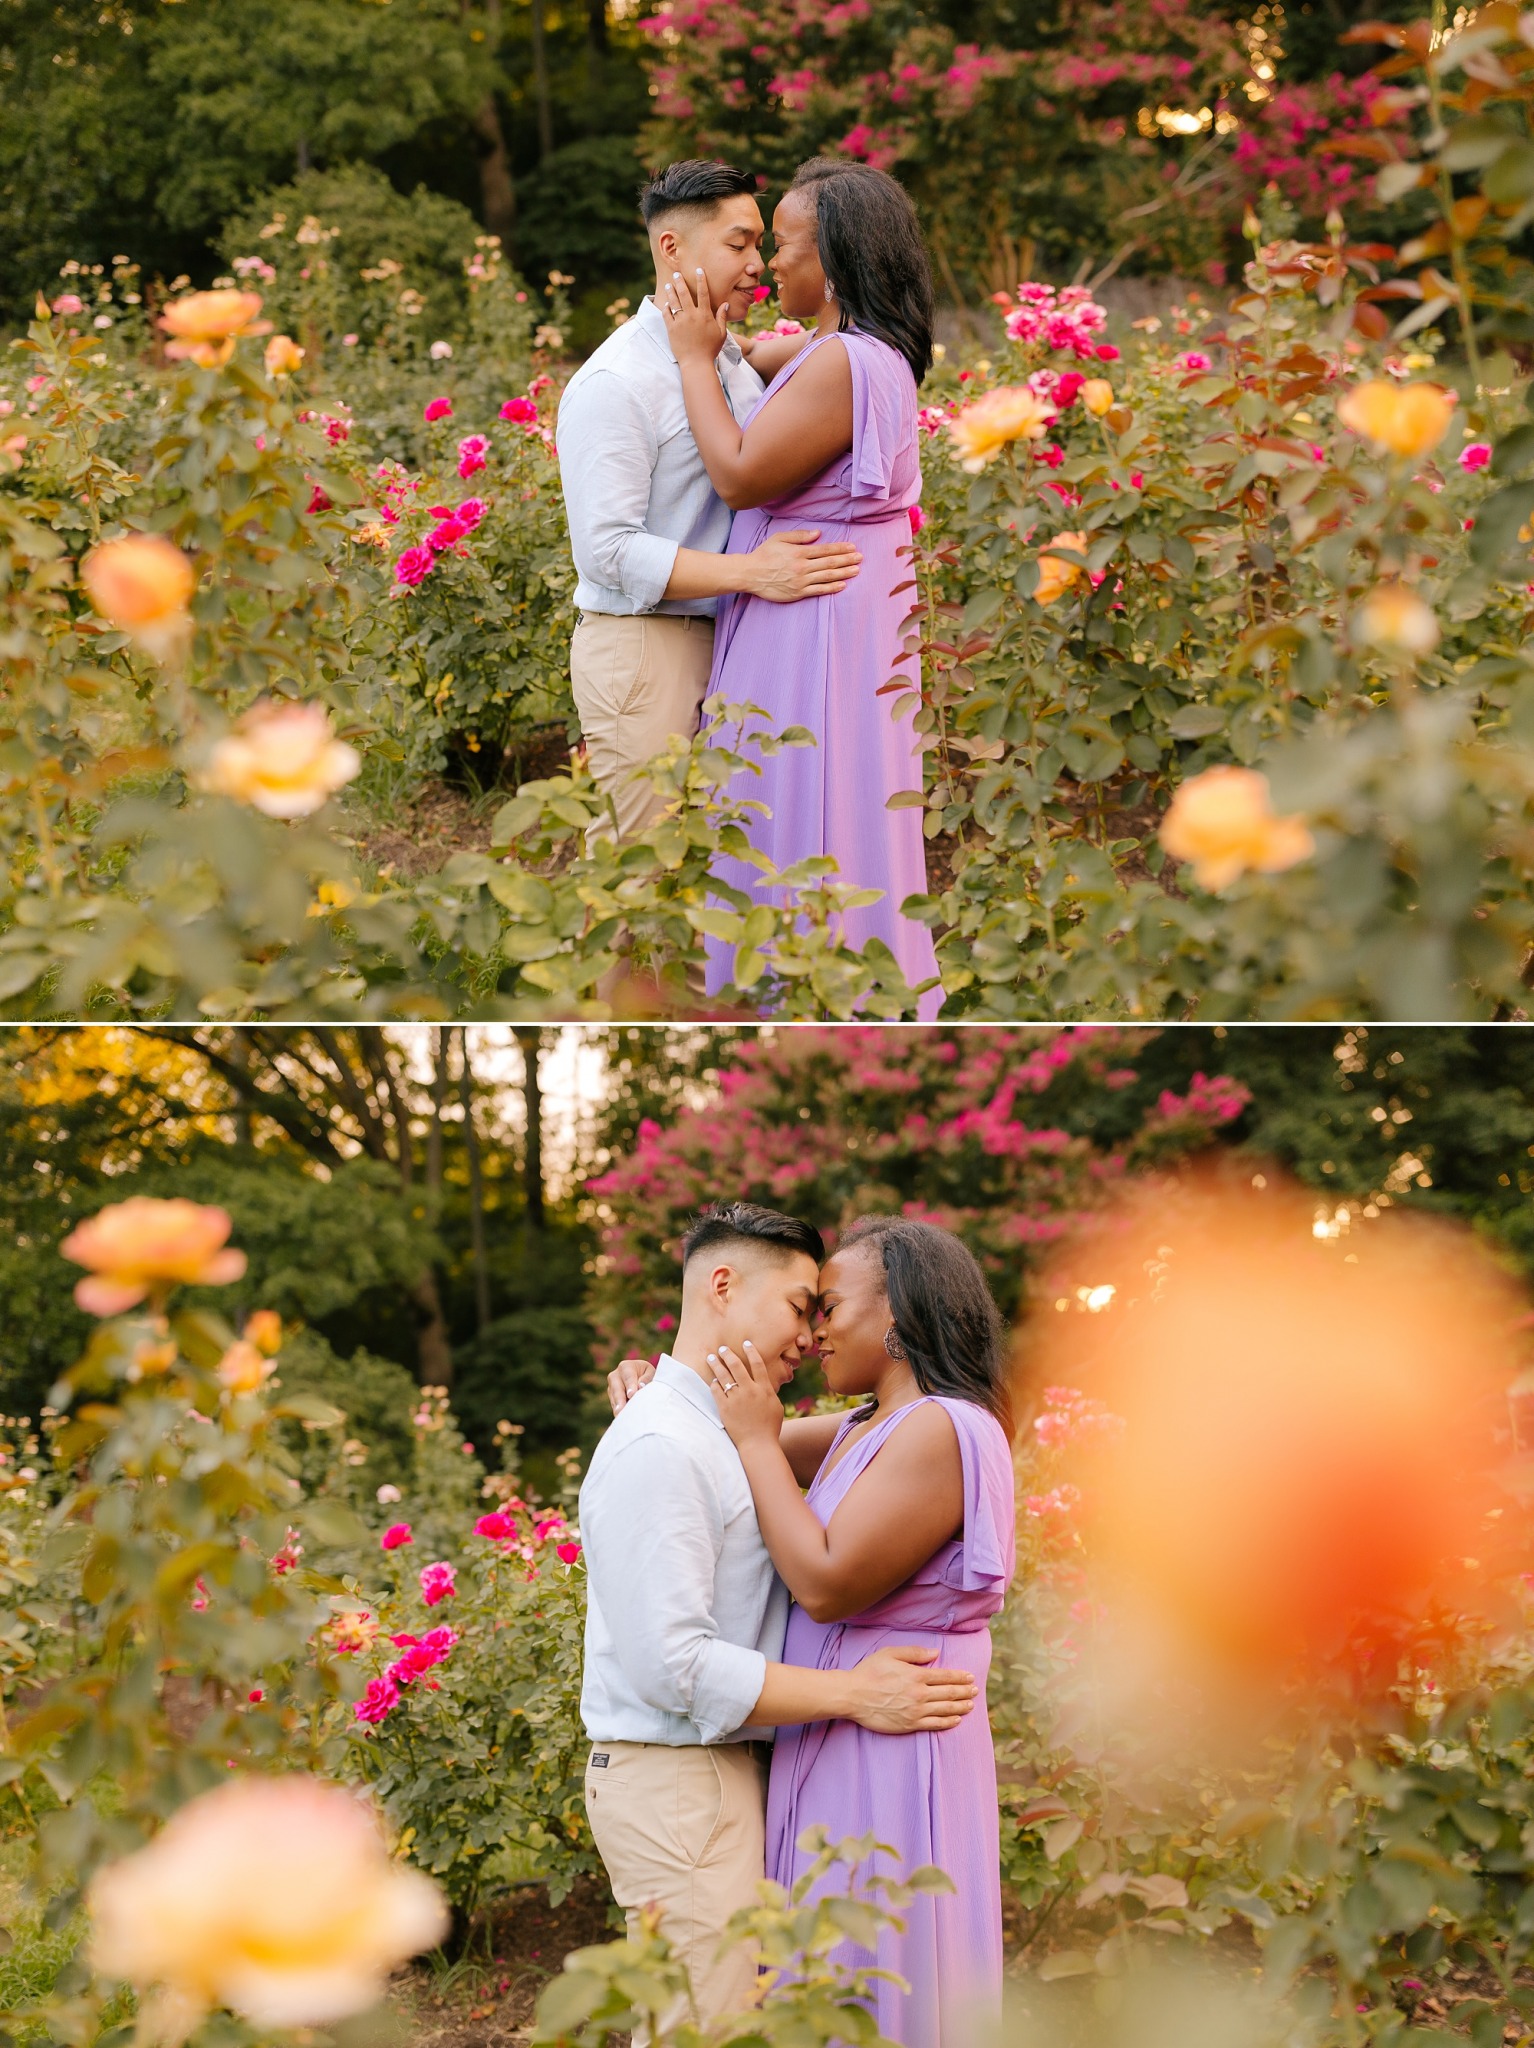 couple kisses while Chelsea Renay photographs them through flower bush